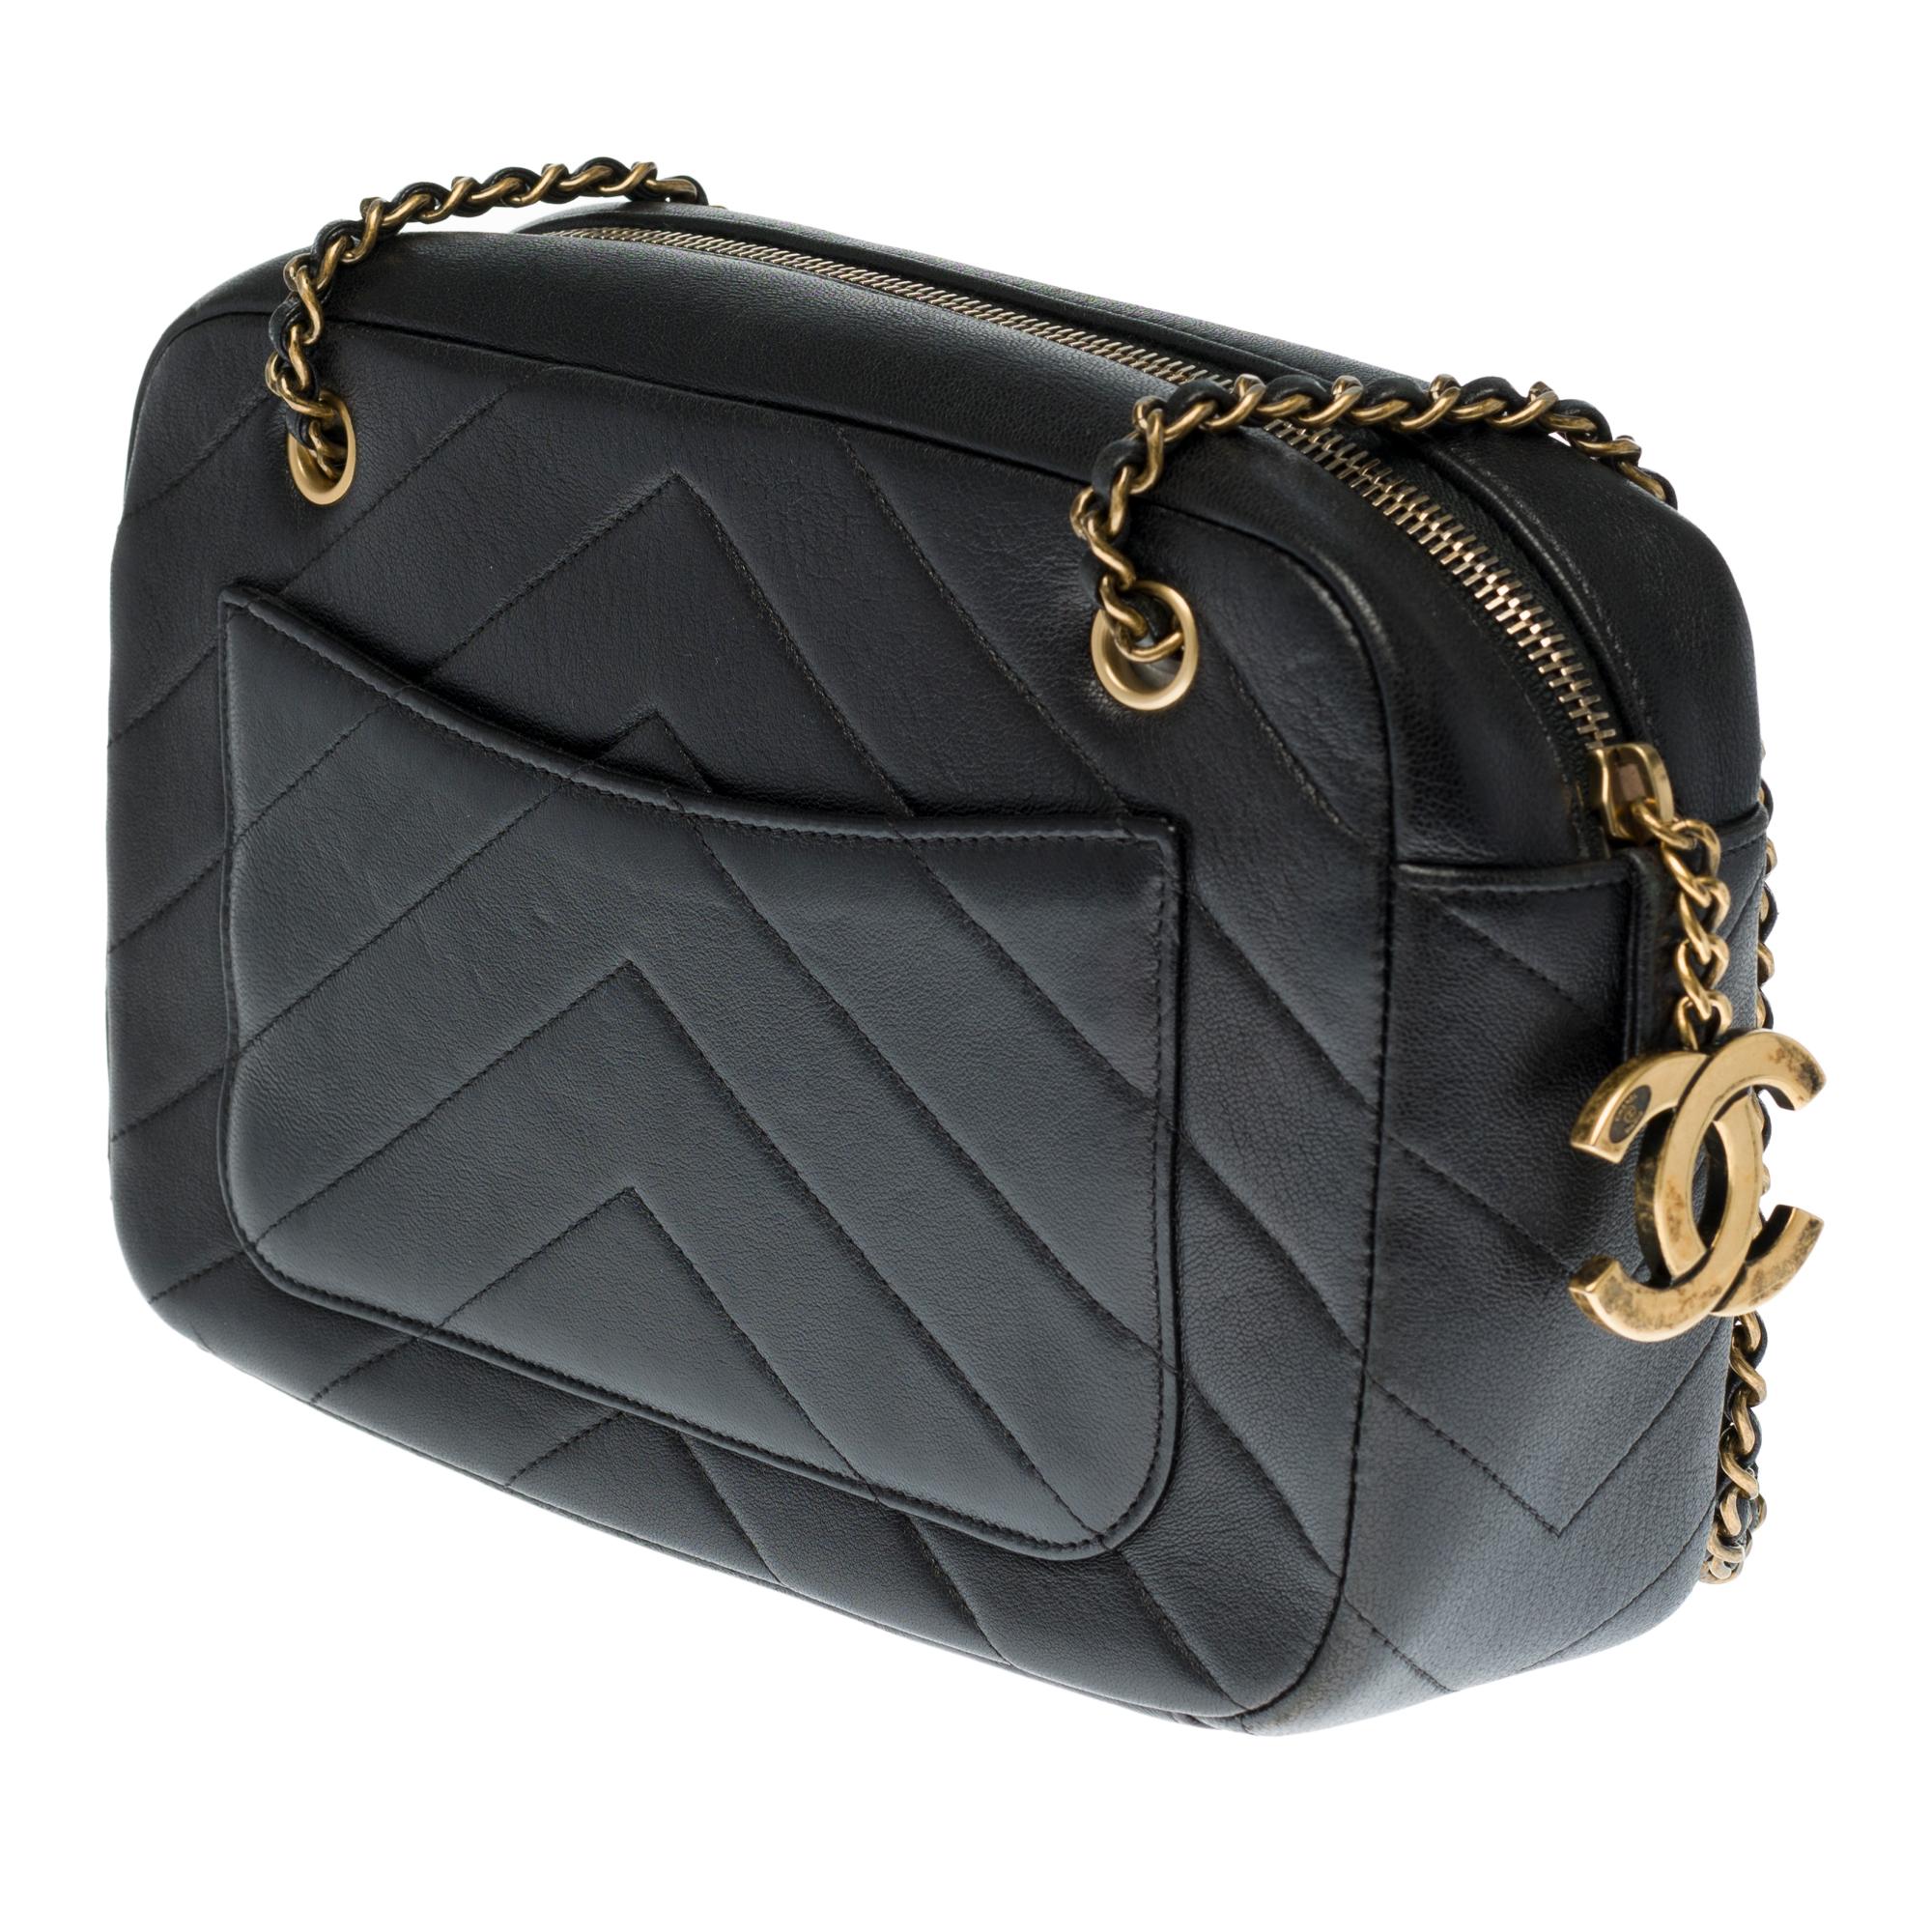 Black Amazing Chanel Camera shoulder bag in black herringbone leather, GHW